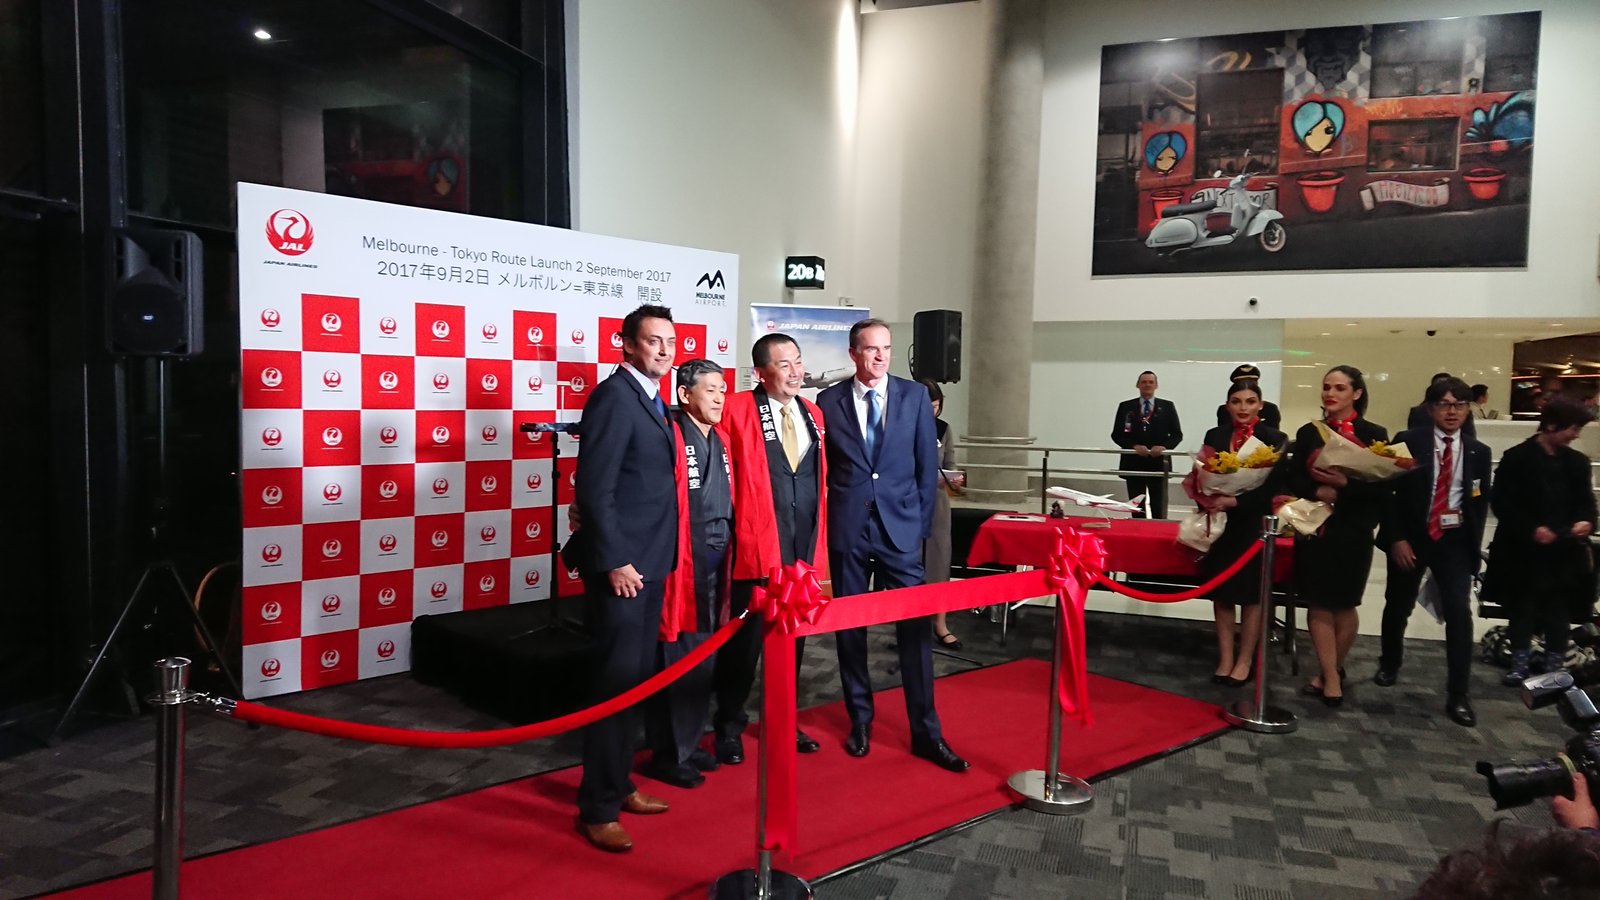 Japan Airlines Melbourne - Tokyo Launch